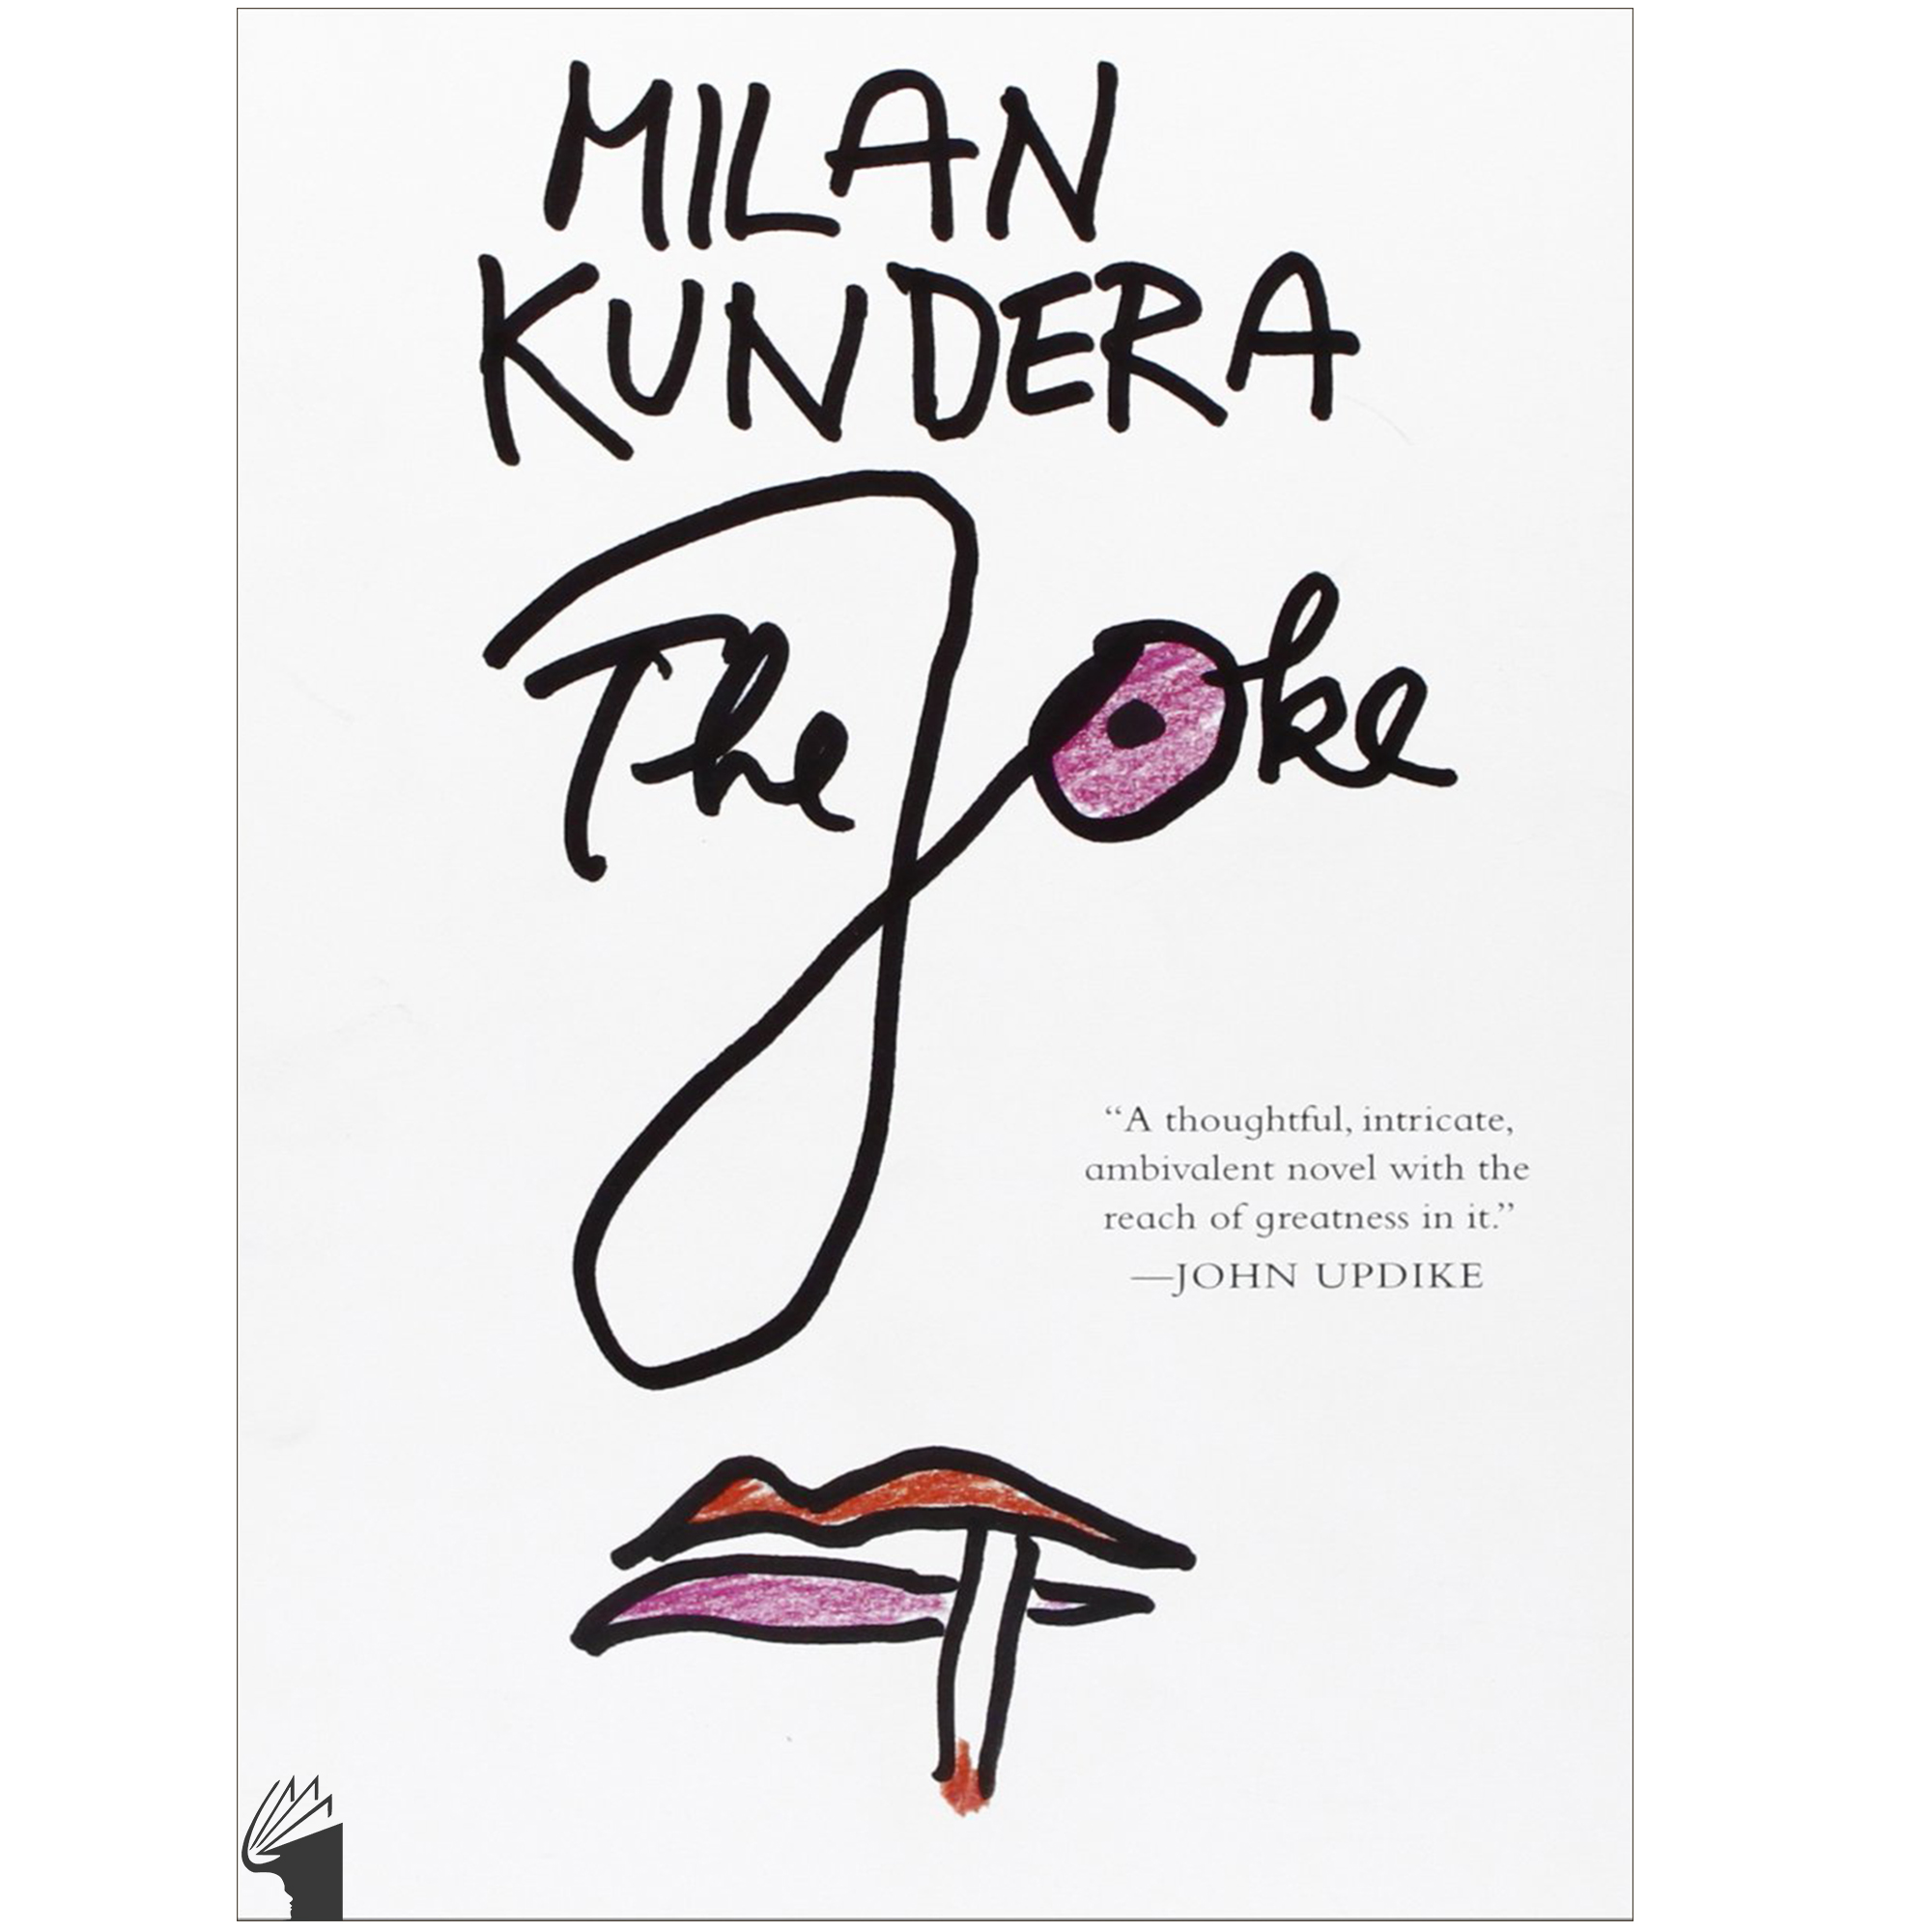 کتاب The Joke اثر Milan Kundera انتشارات معیار علم